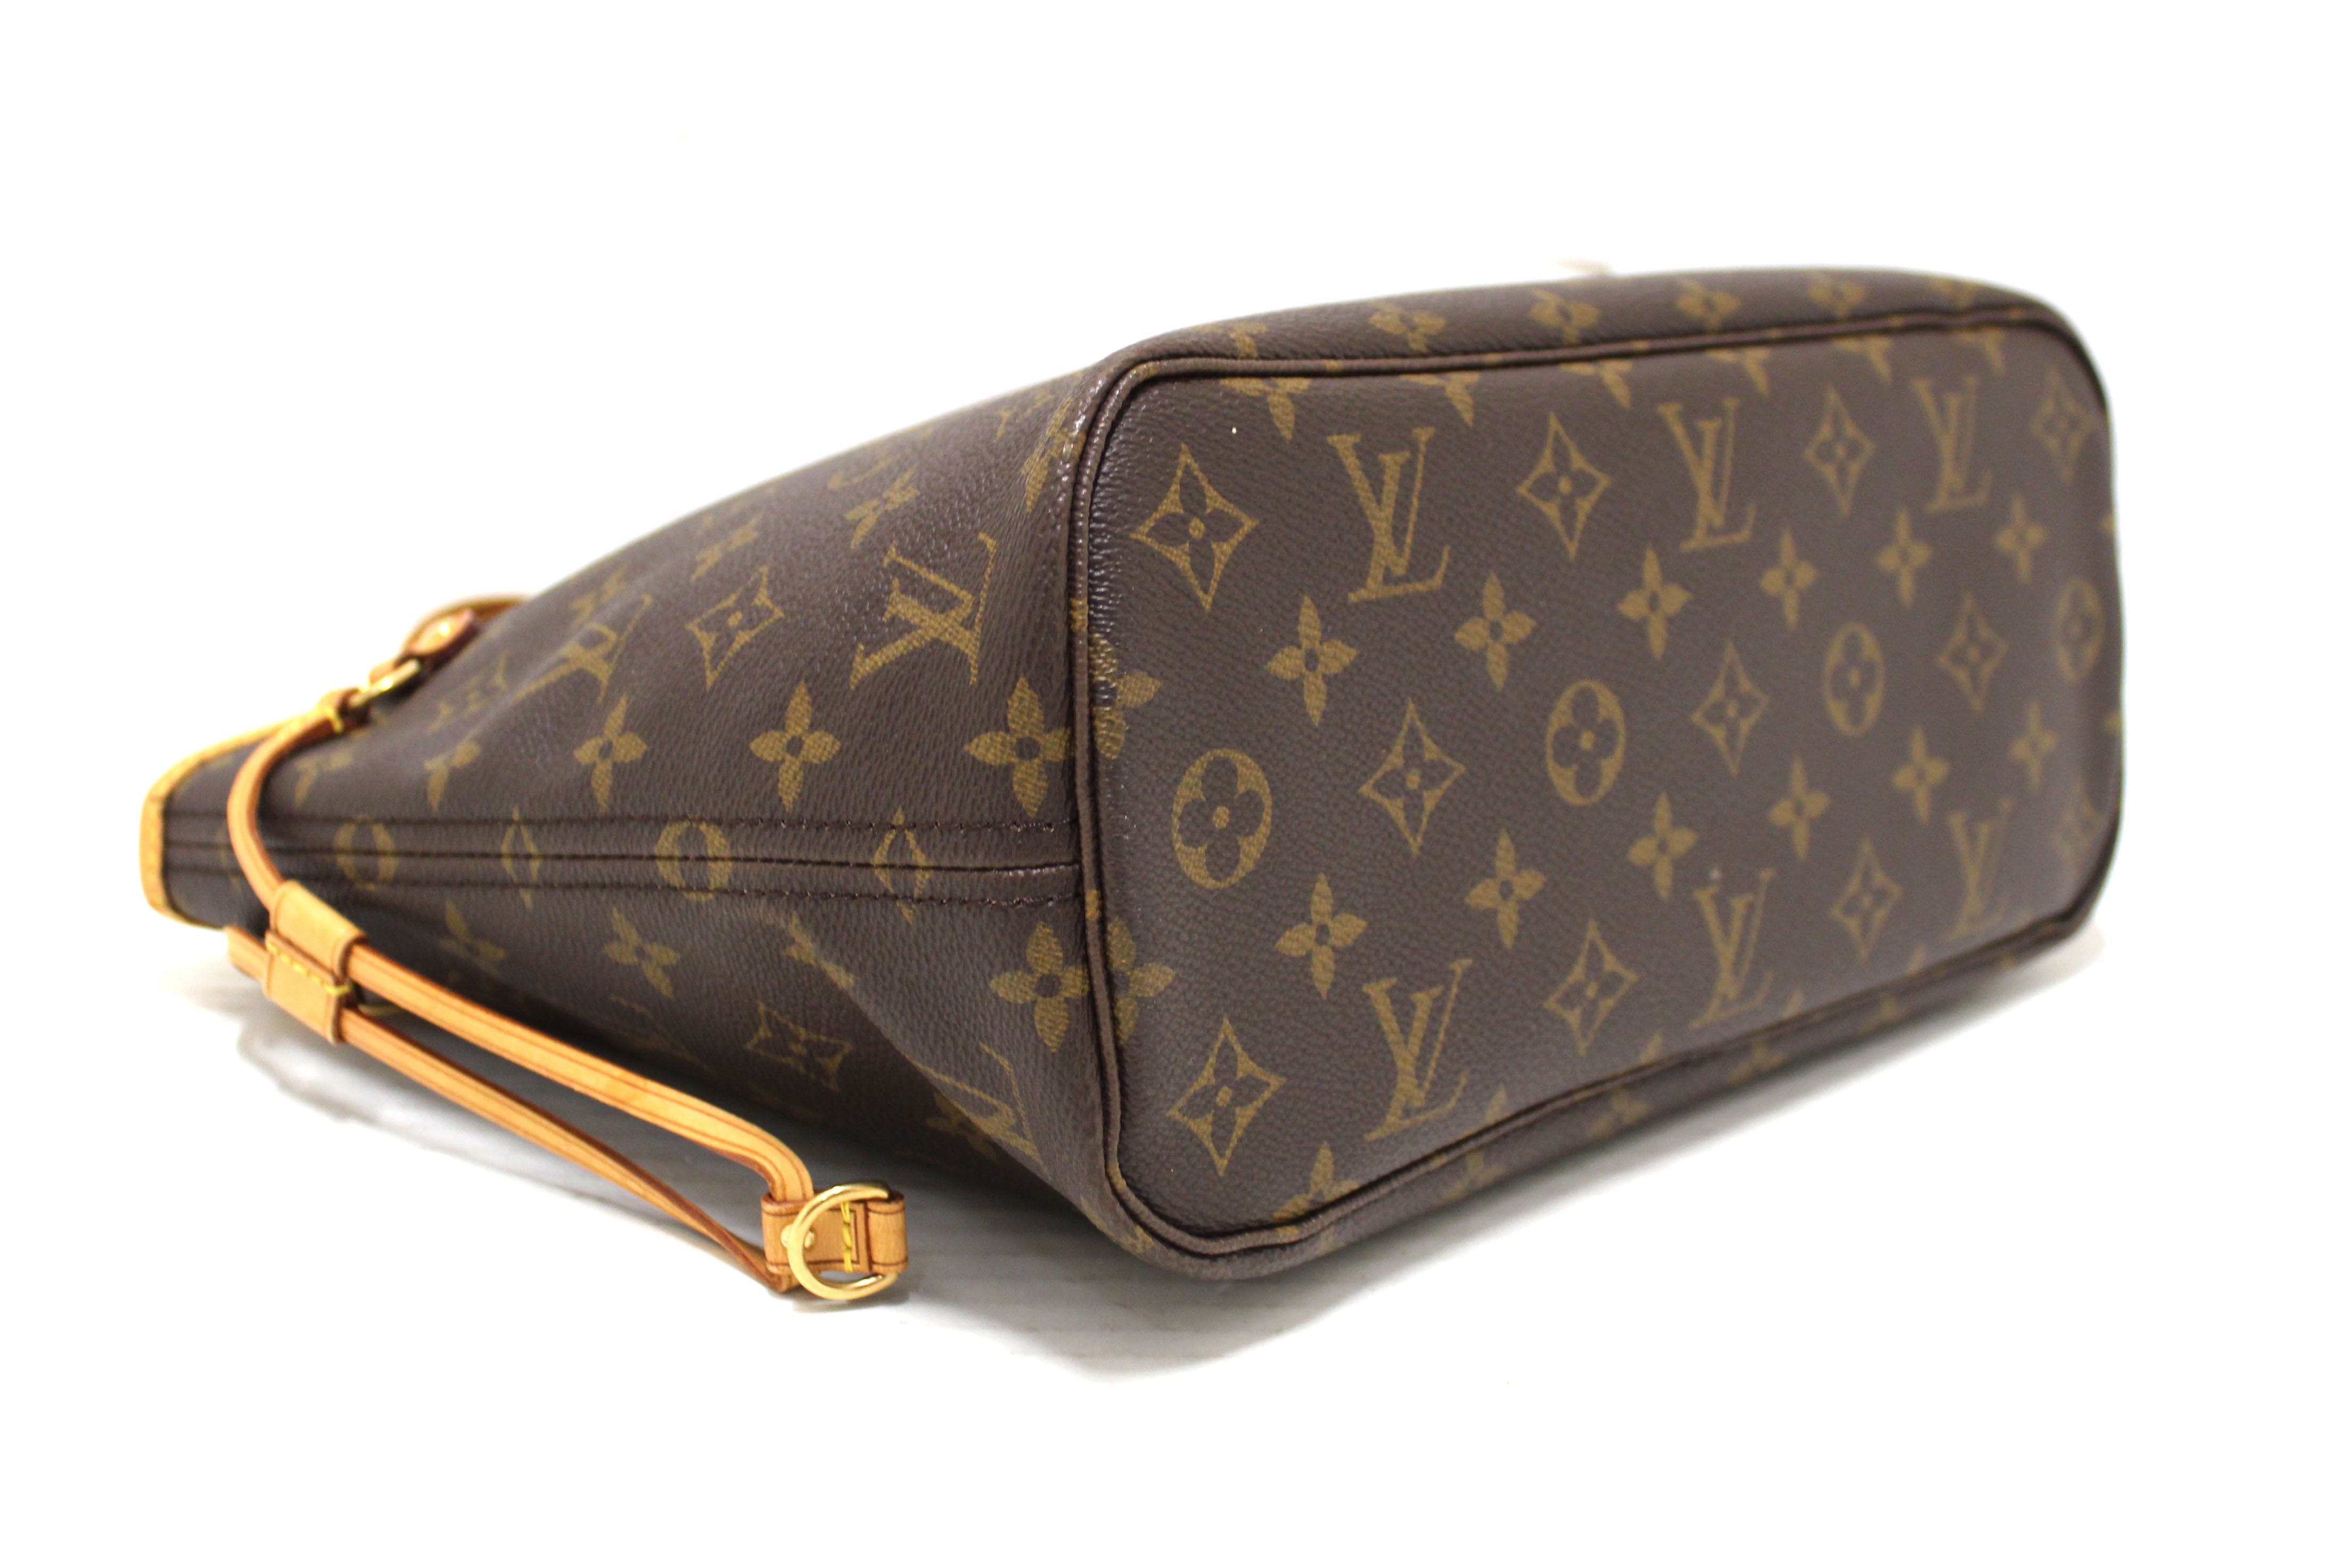 Authentic Louis Vuitton Classic Monogram Neverfull PM Tote Shoulder Bag